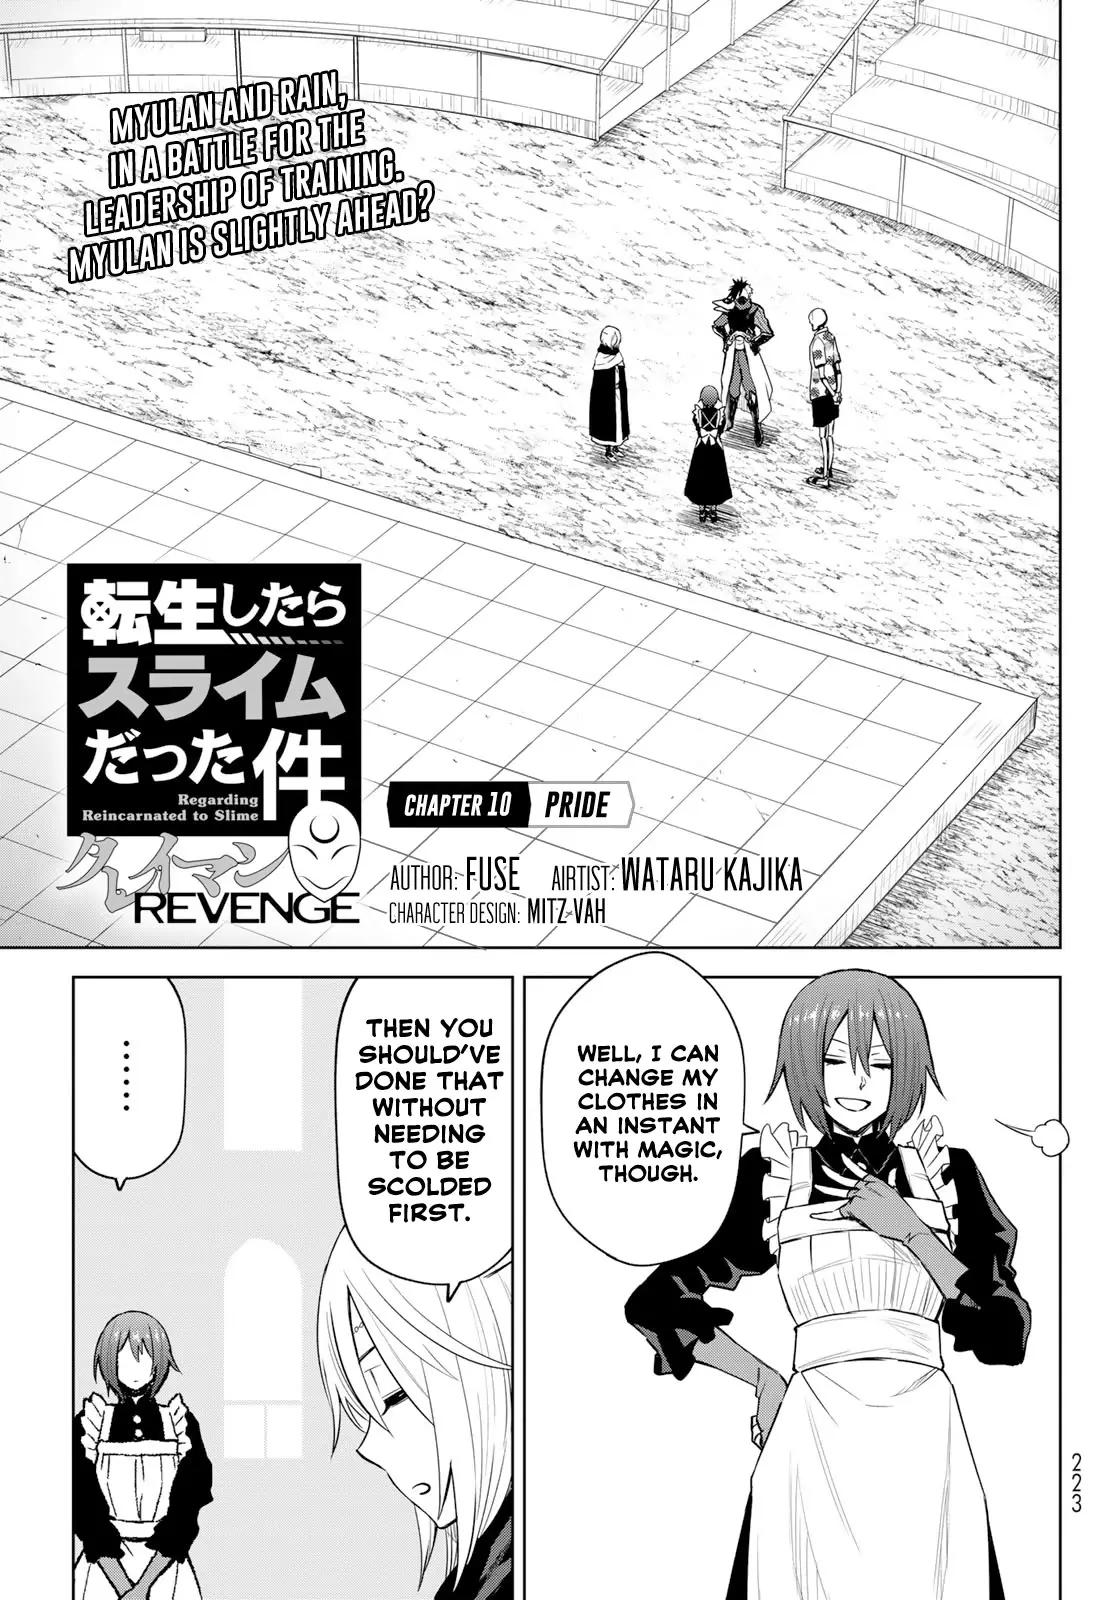 Tensei Shitara Slime Datta Ken: Clayman Revenge - 10 page 3-83c19cb9